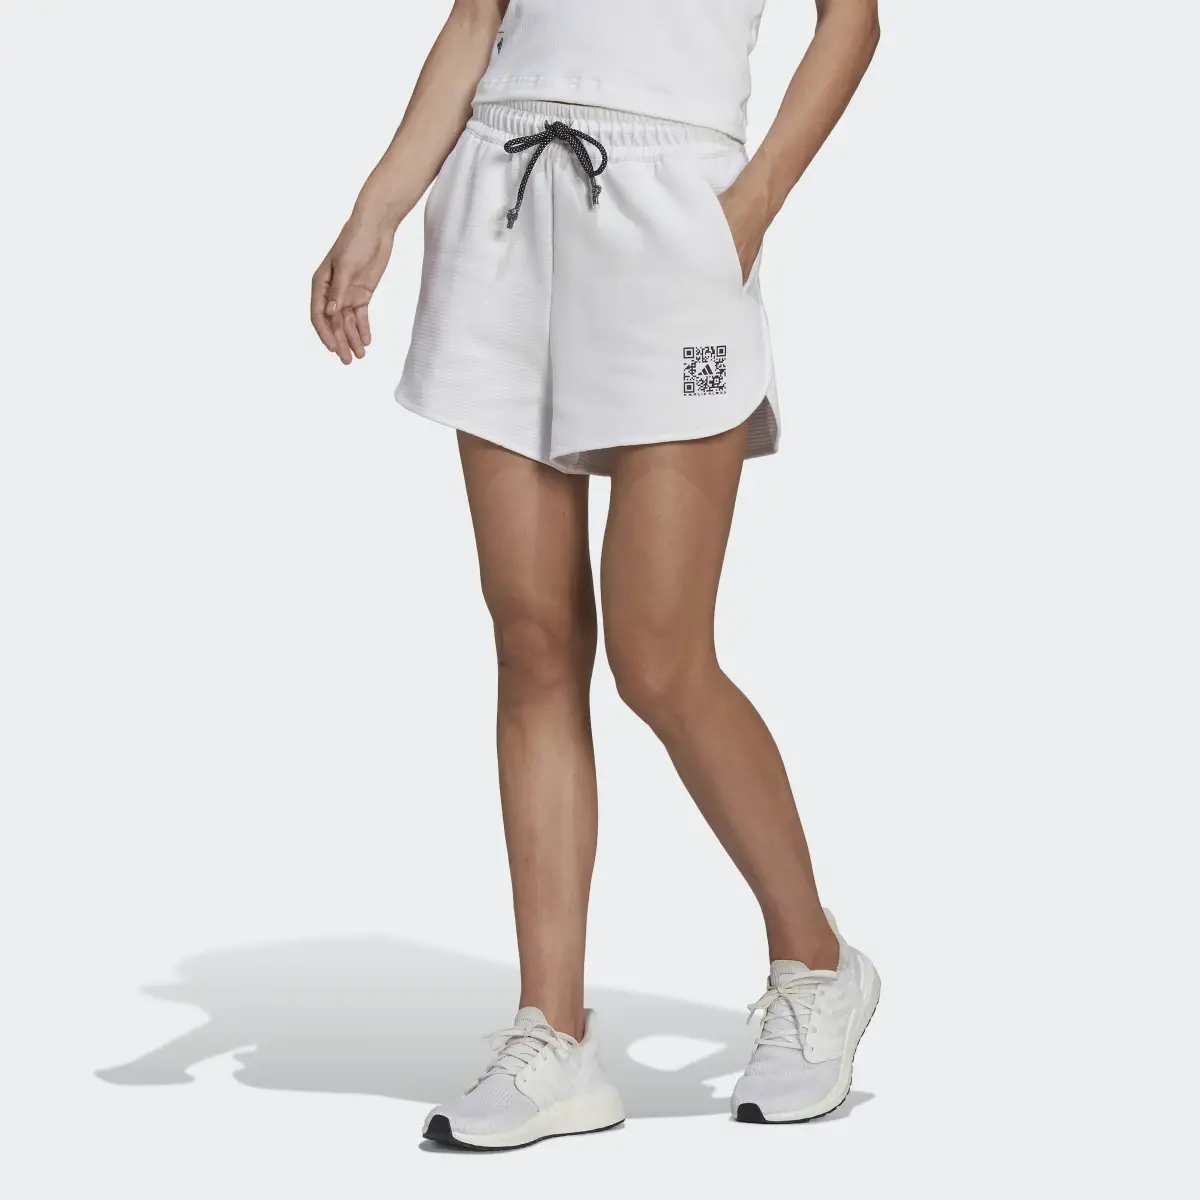 Adidas Short Karlie Kloss x adidas. 1